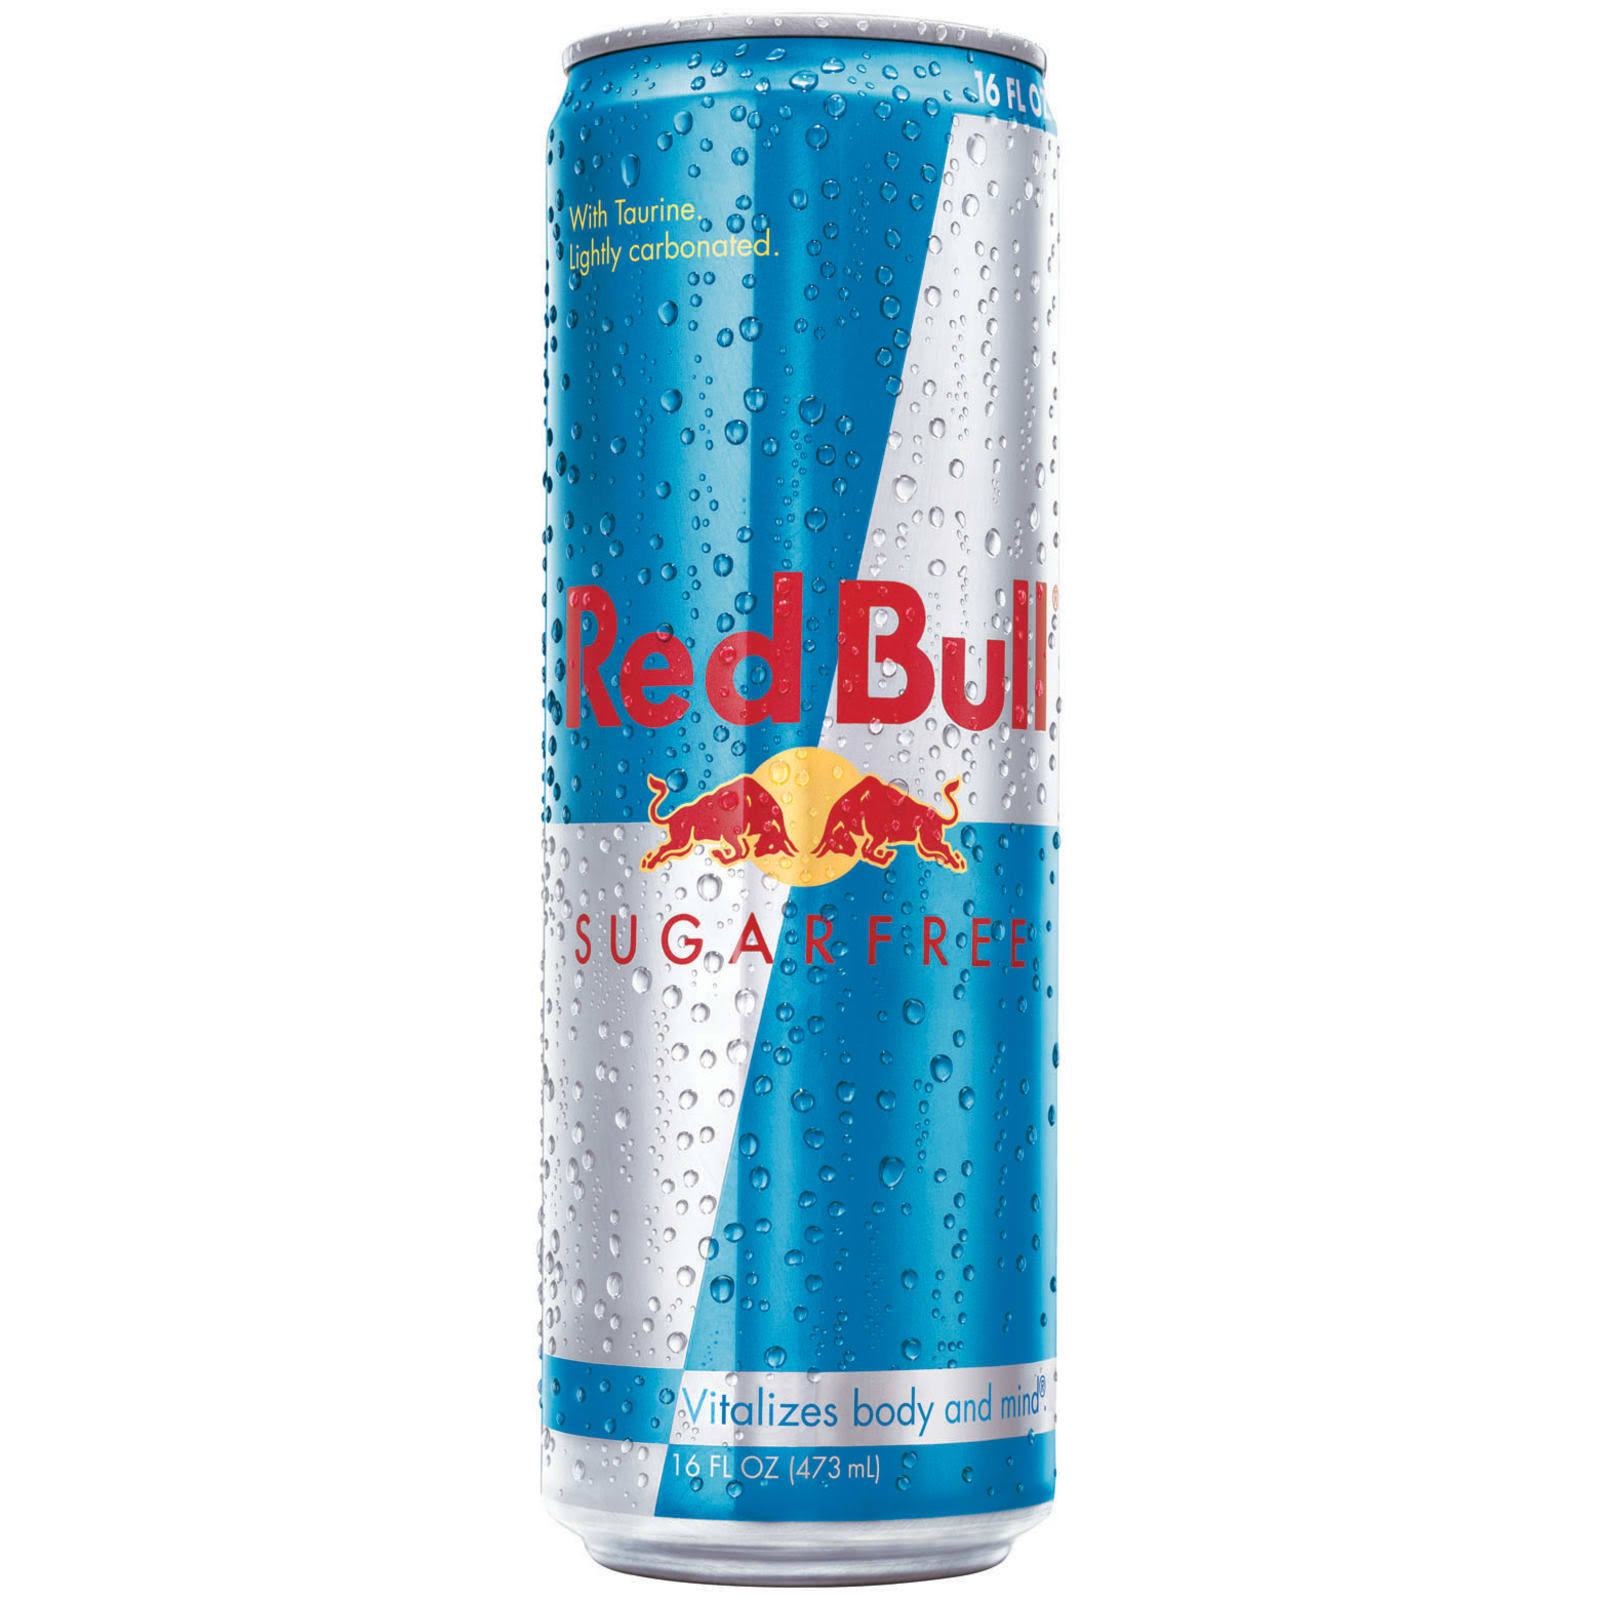 Red Bull Sugarfree Energy Drink - 16 Oz